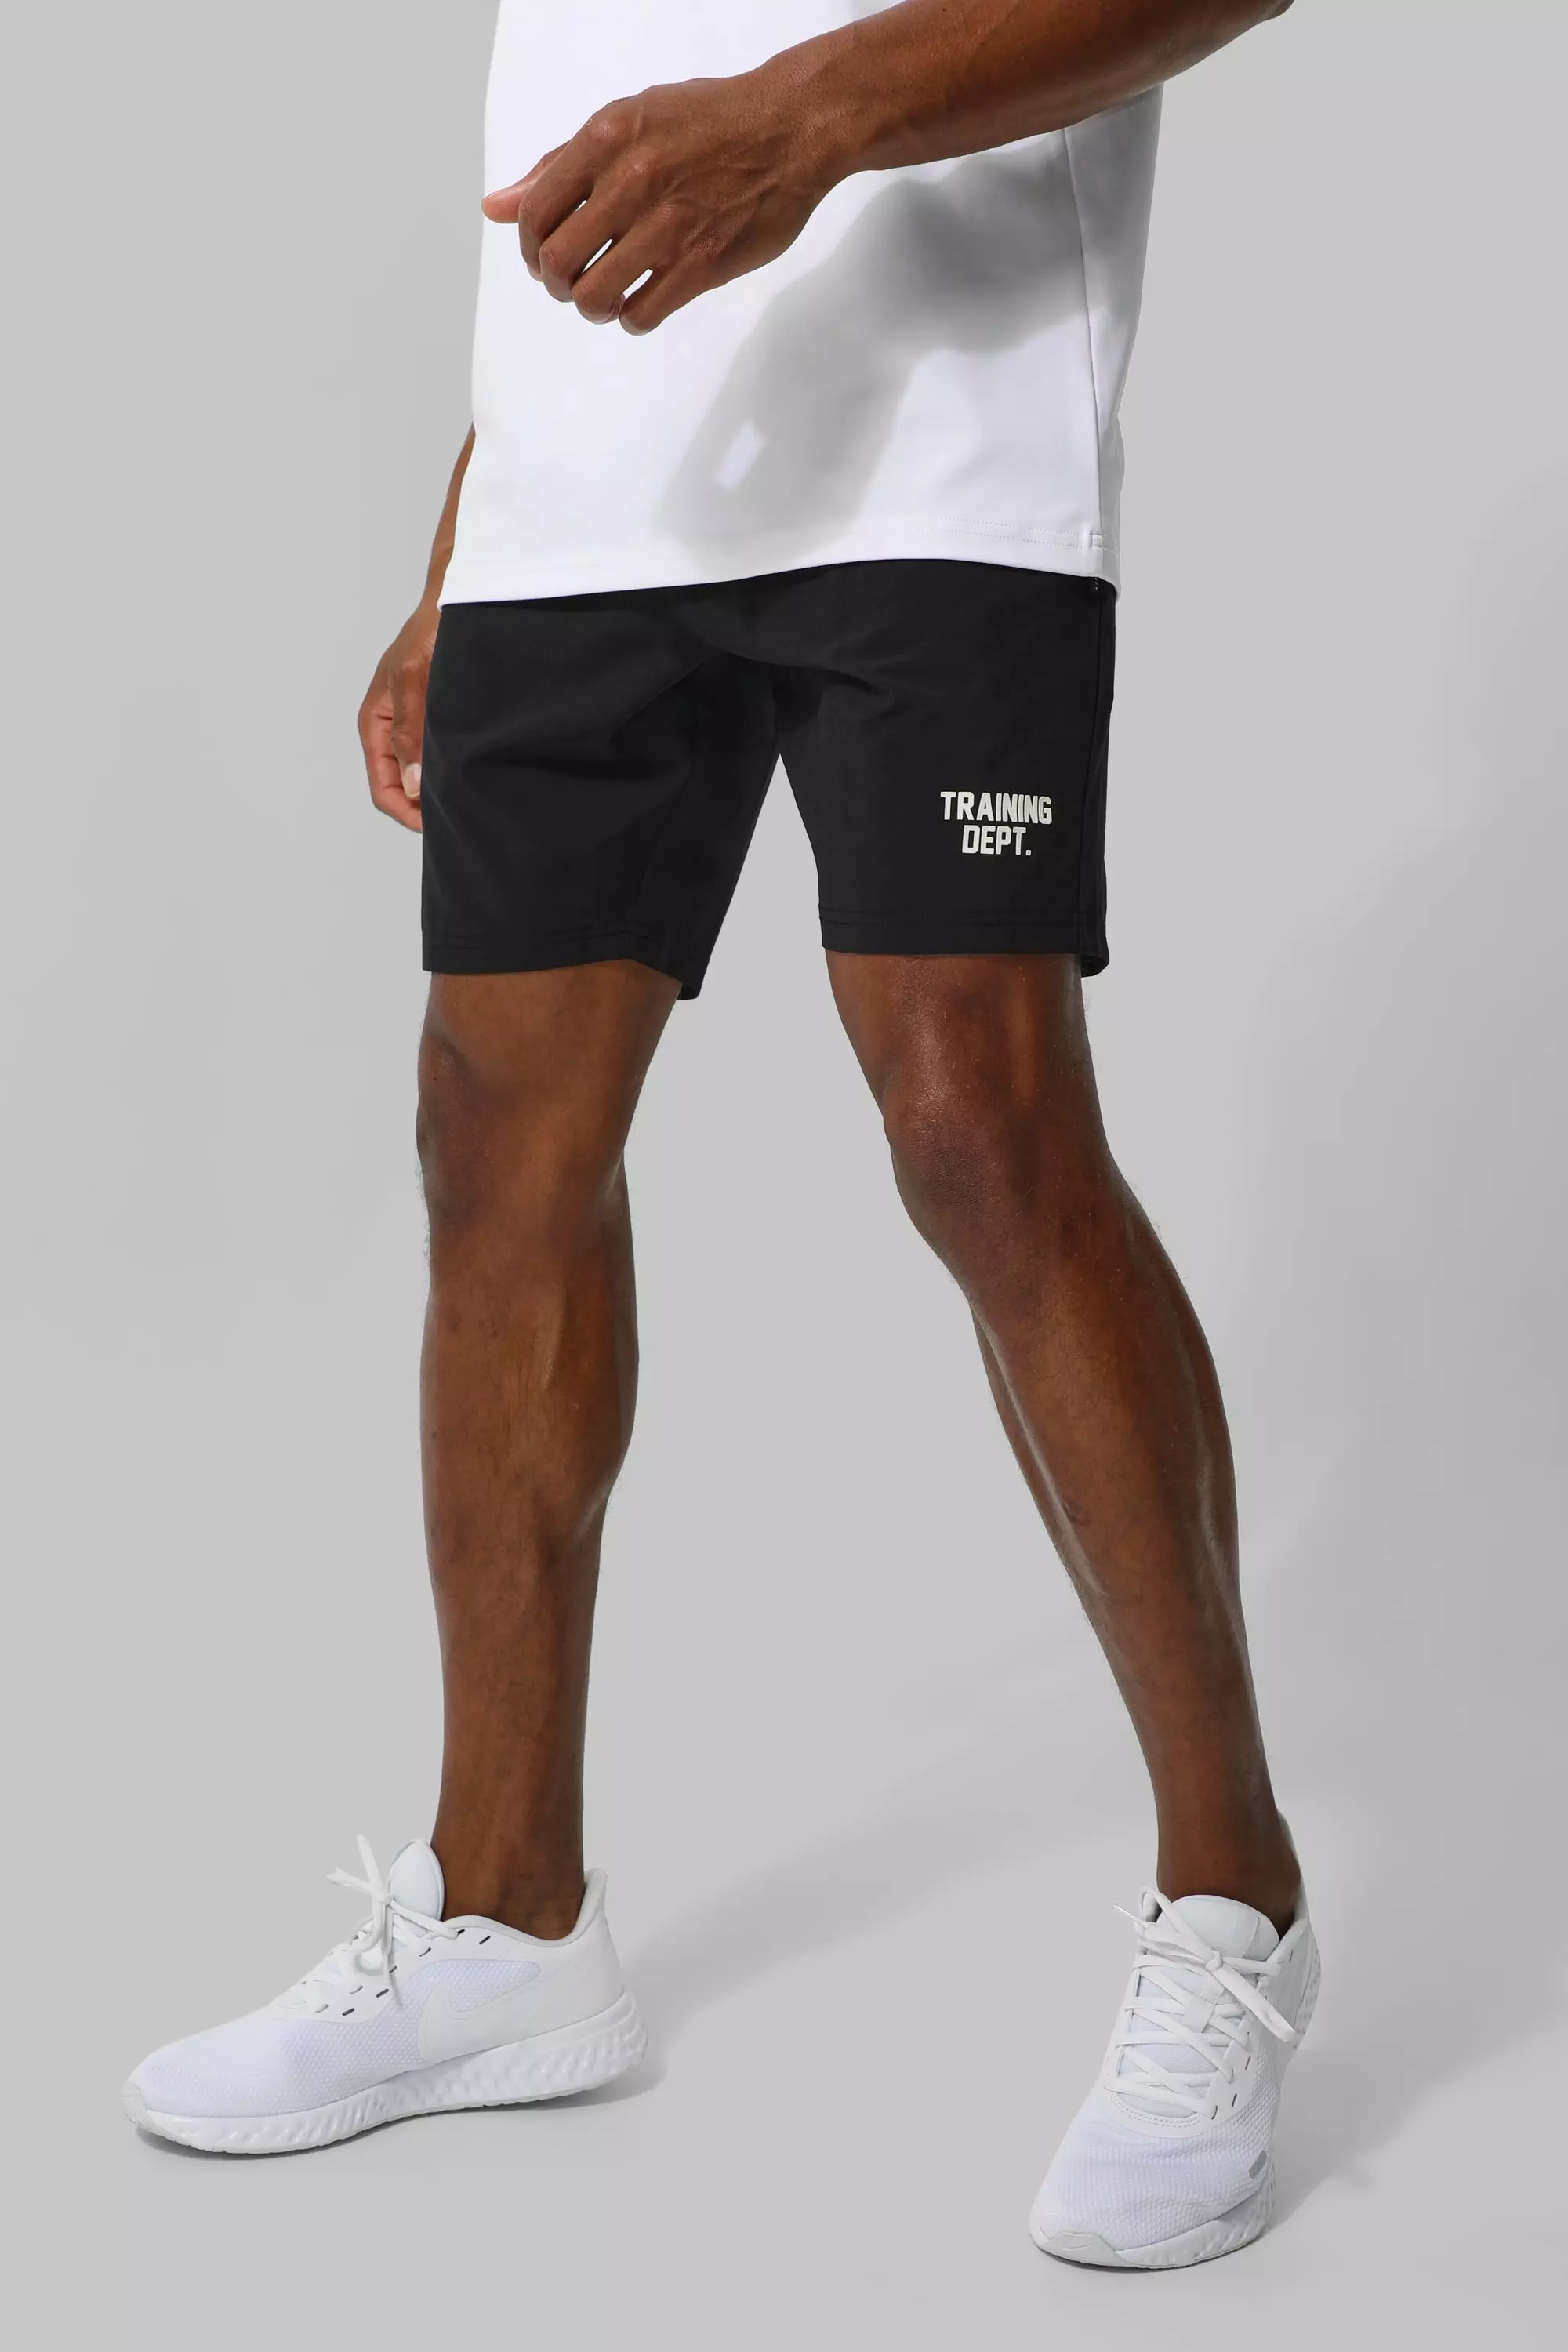 Man Active Performance Training Dept Shorts Black